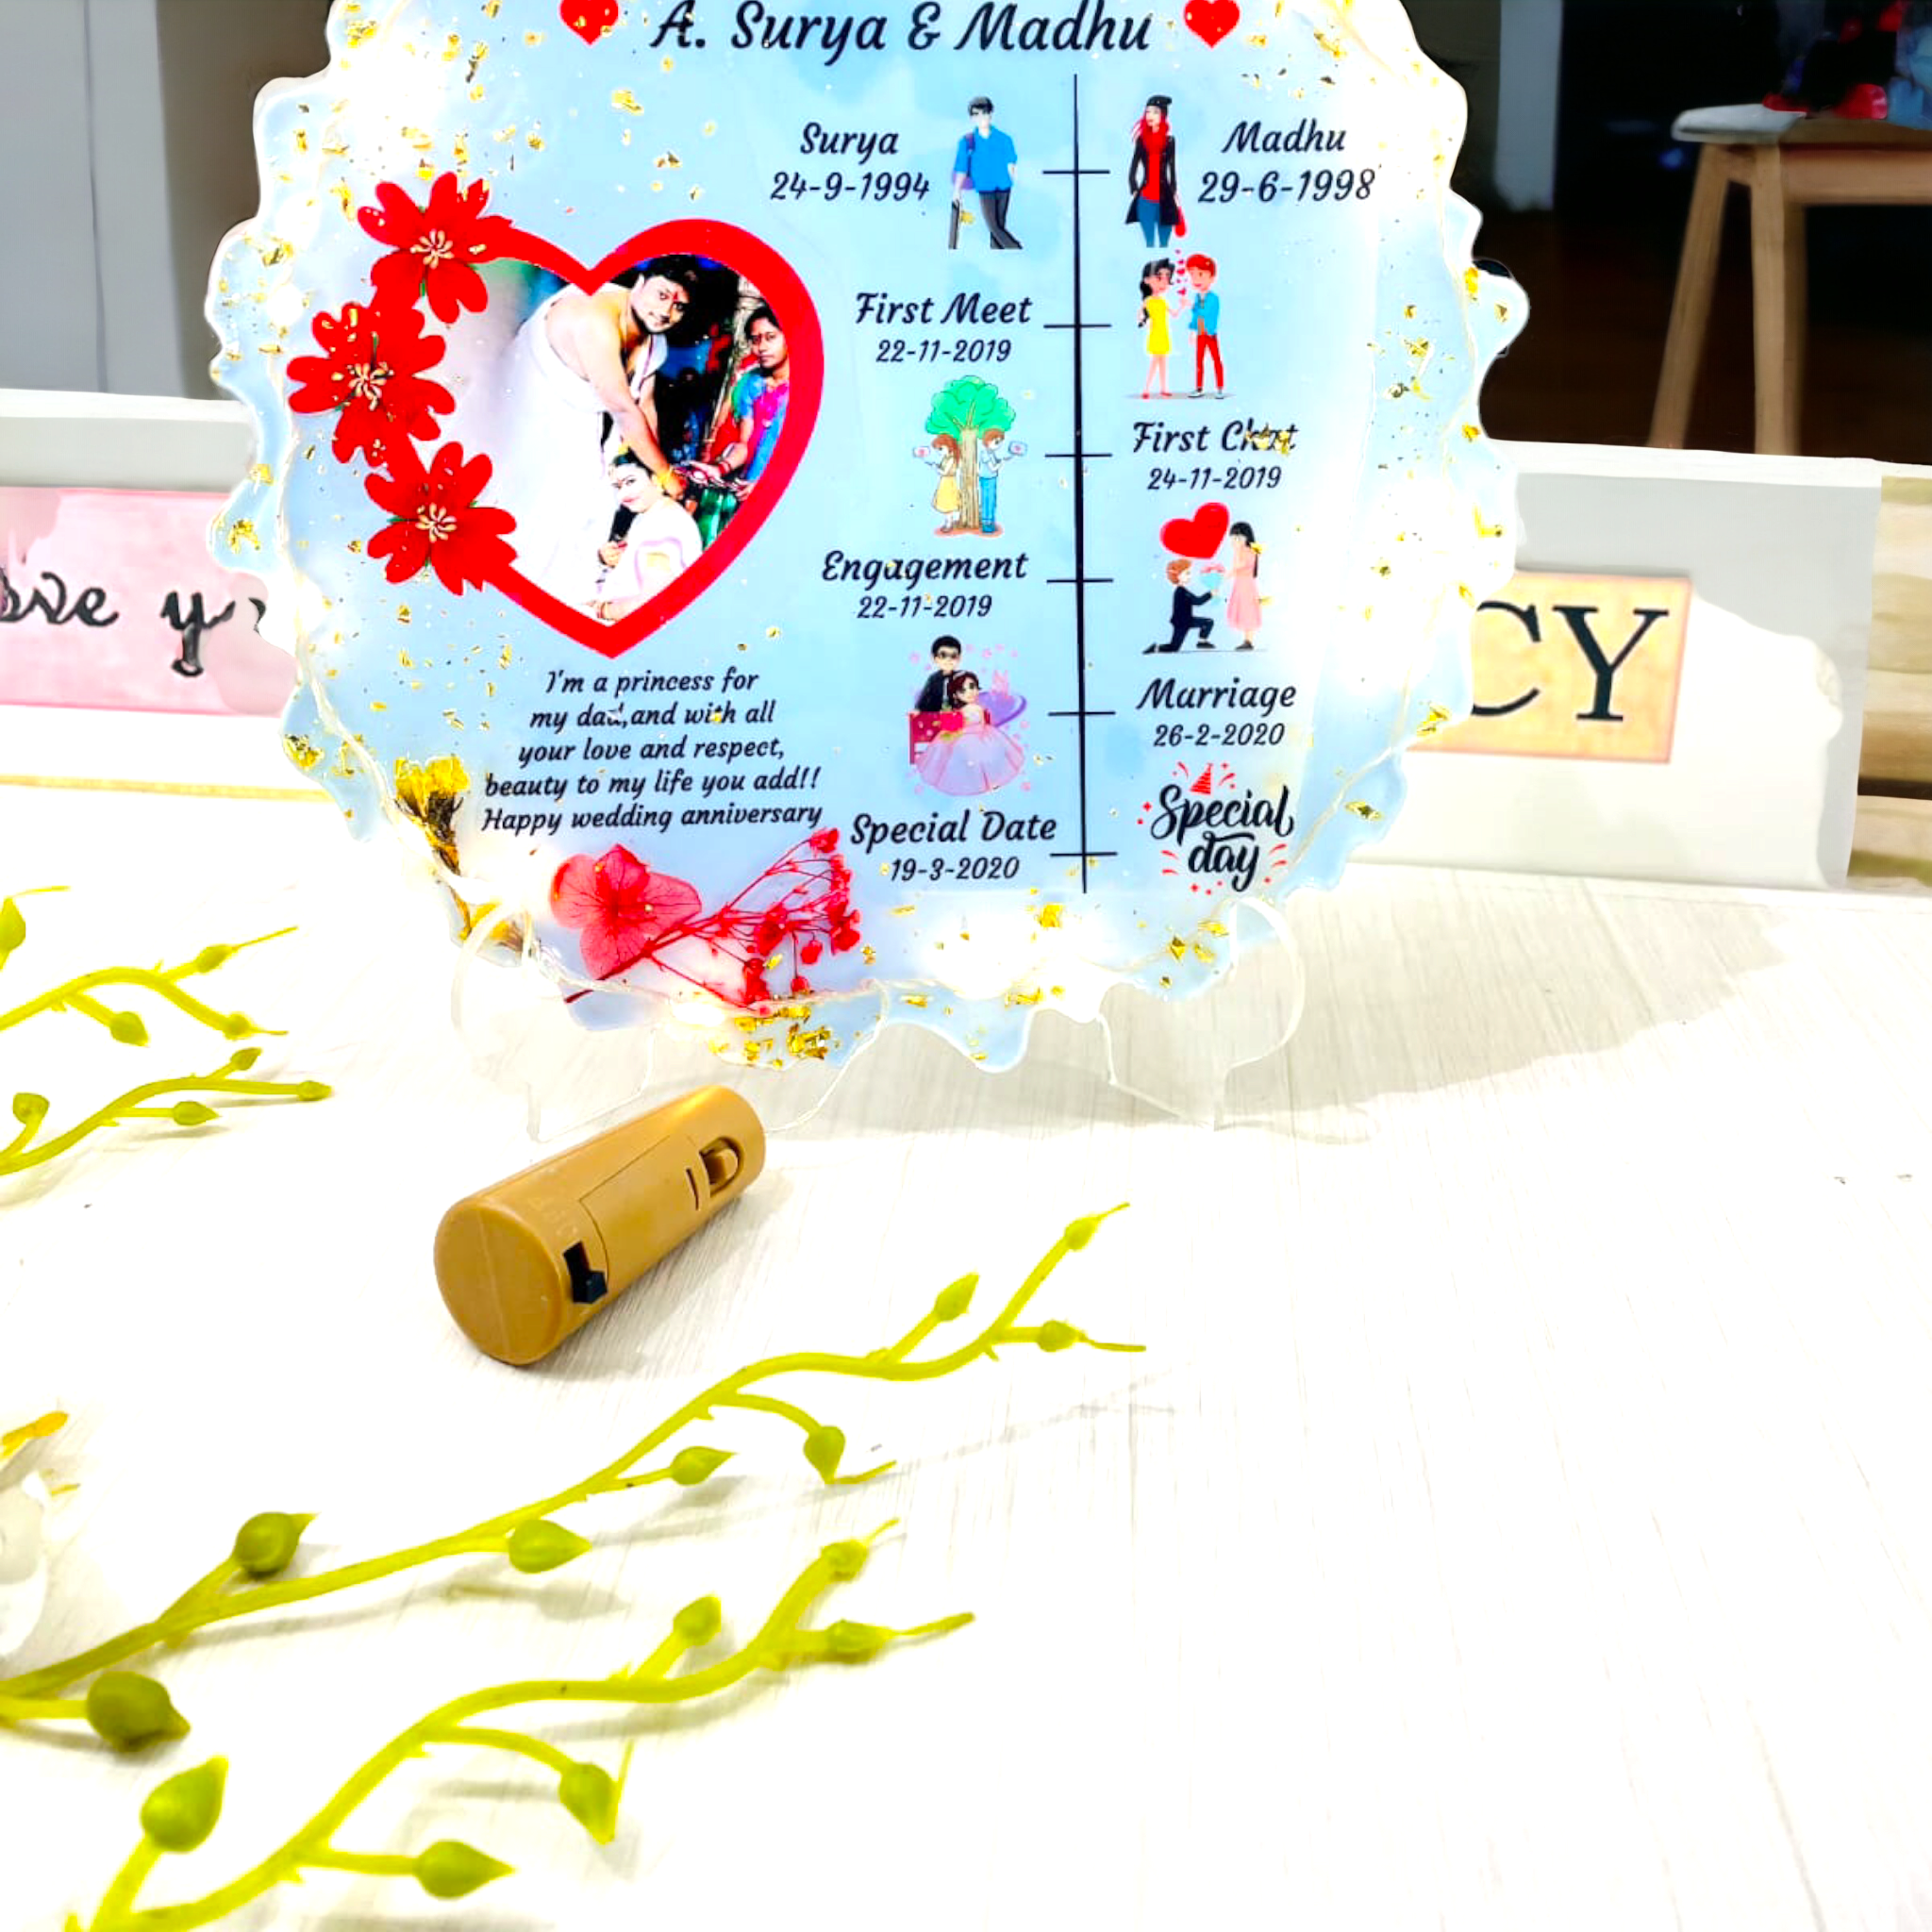 Resin Table Top | Resin Love story | Resin photo table top | Resin art | Personalized wedding resin art | Anniversary gift | Wedding gift